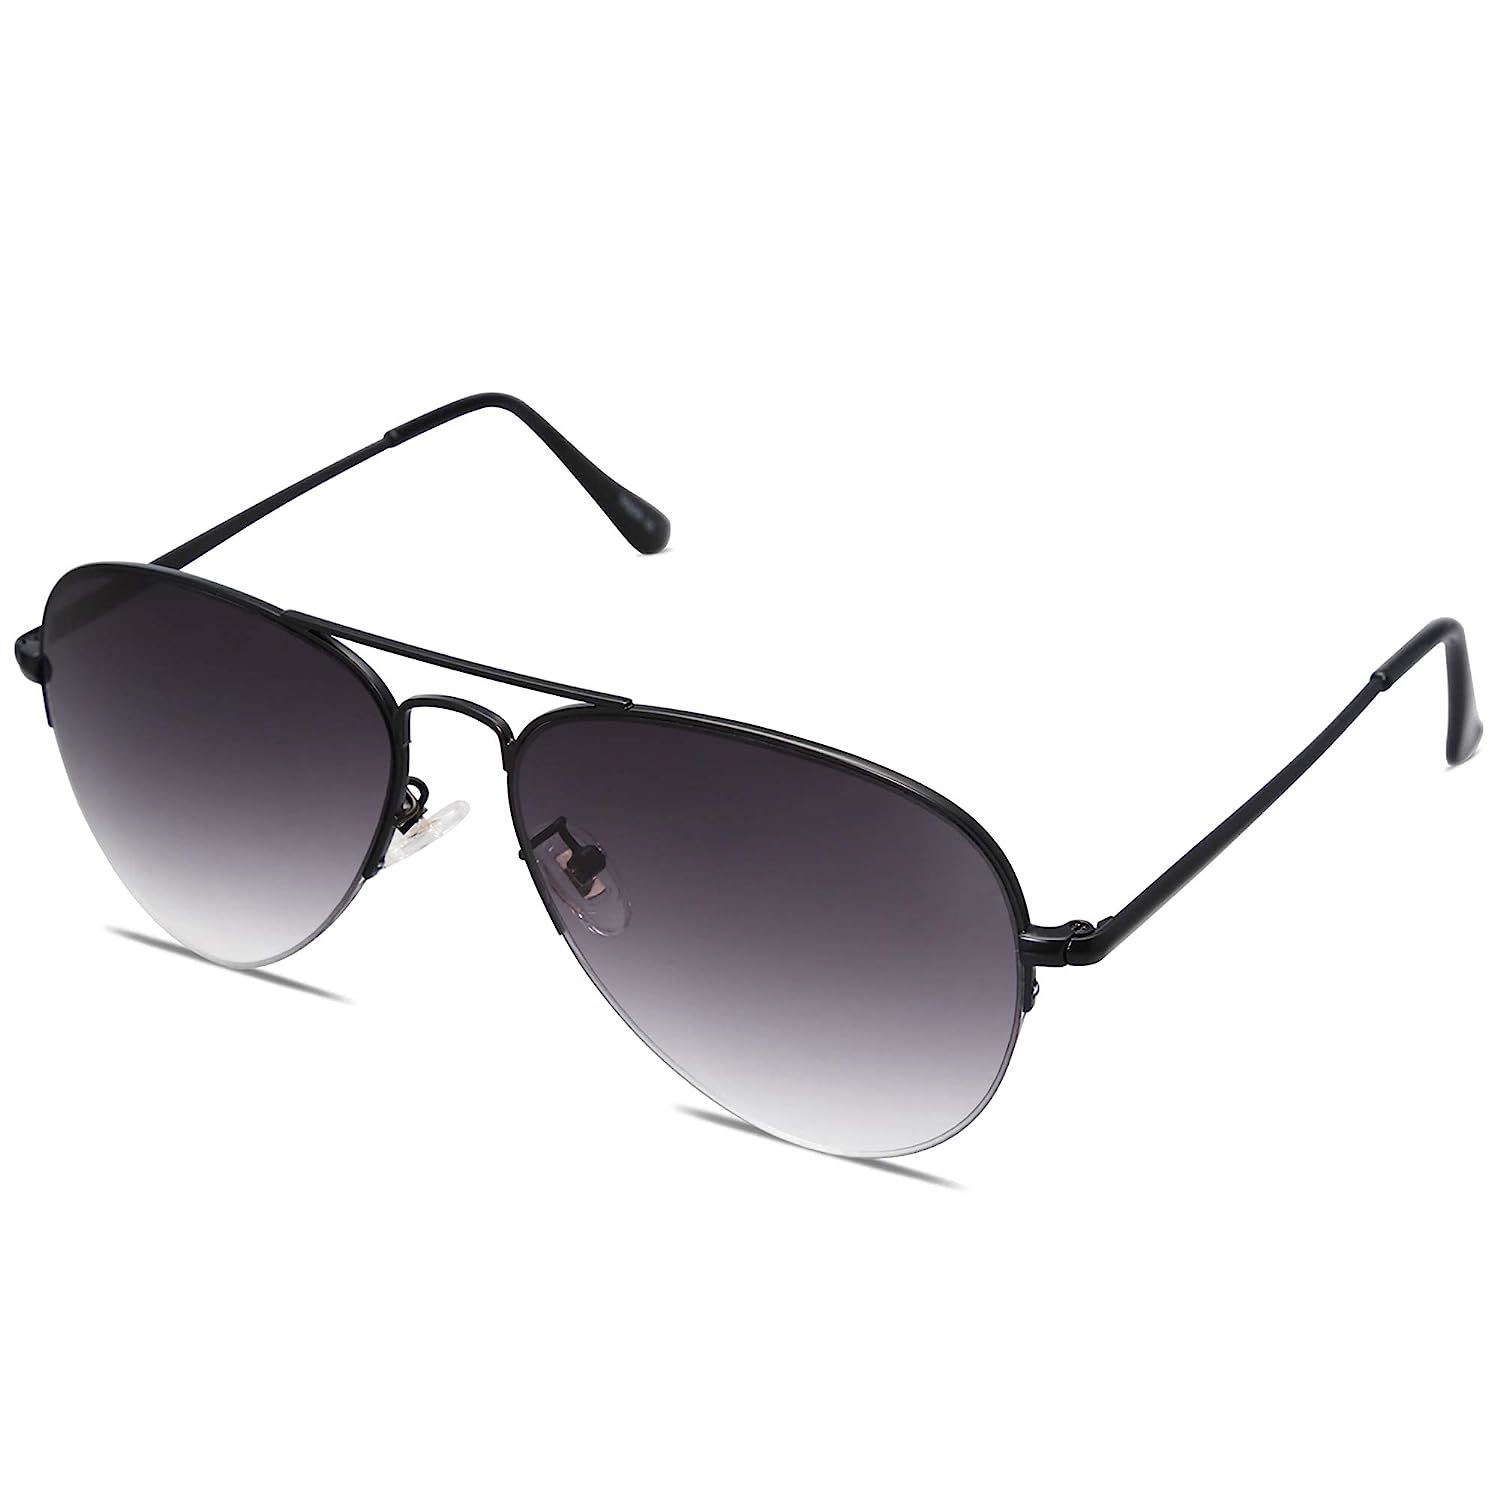 Primary image for SOJOS Men's Women's Sunglasses, Classic Semi Rimless Metal Frame SJ1106 with Bla